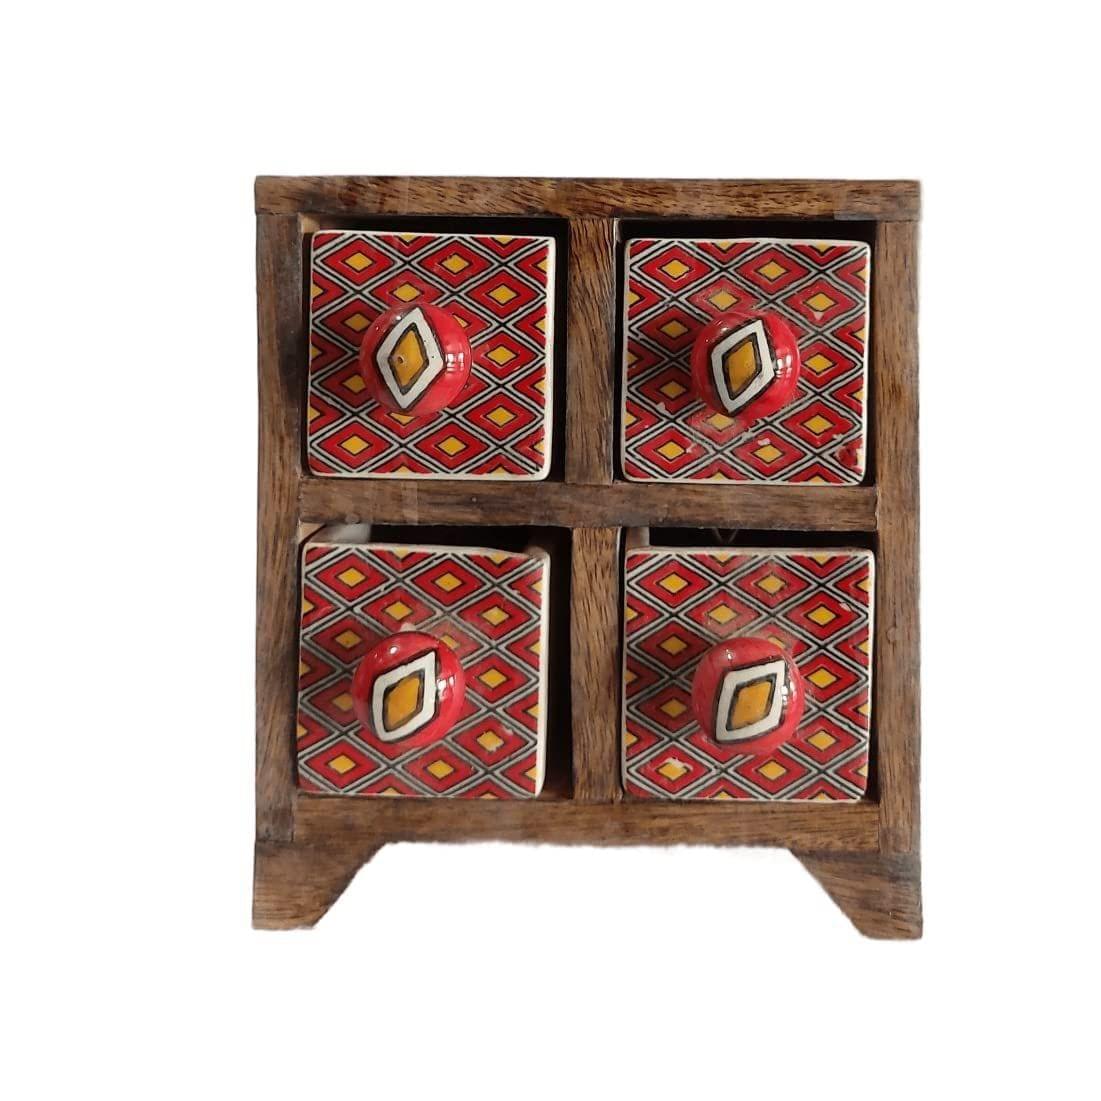 THE ALLCHEMY wooden four storage spice box